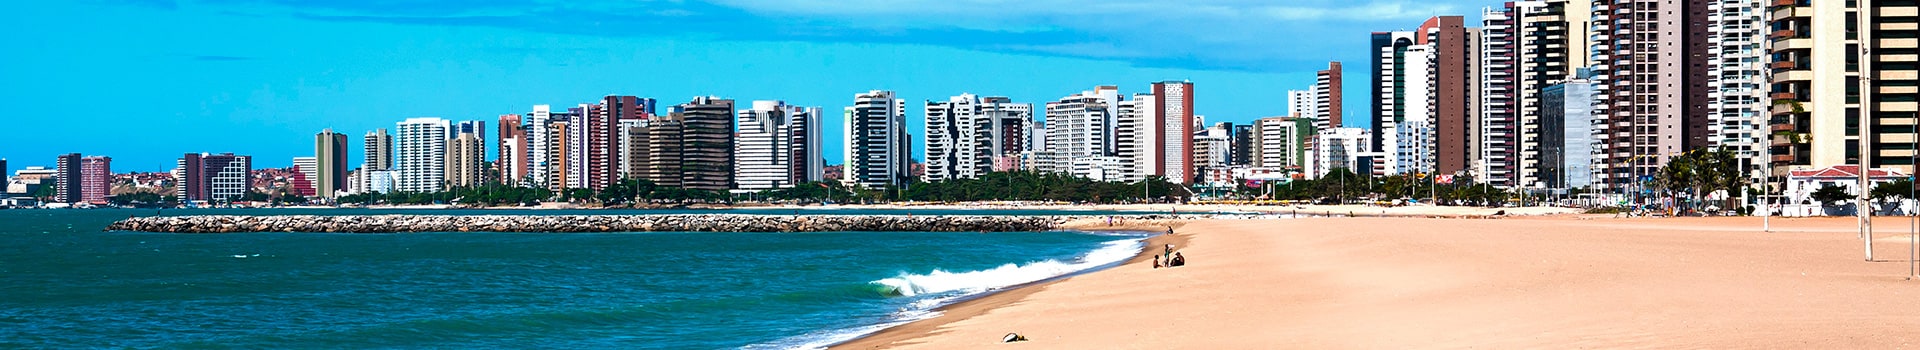 Recife - Fortaleza